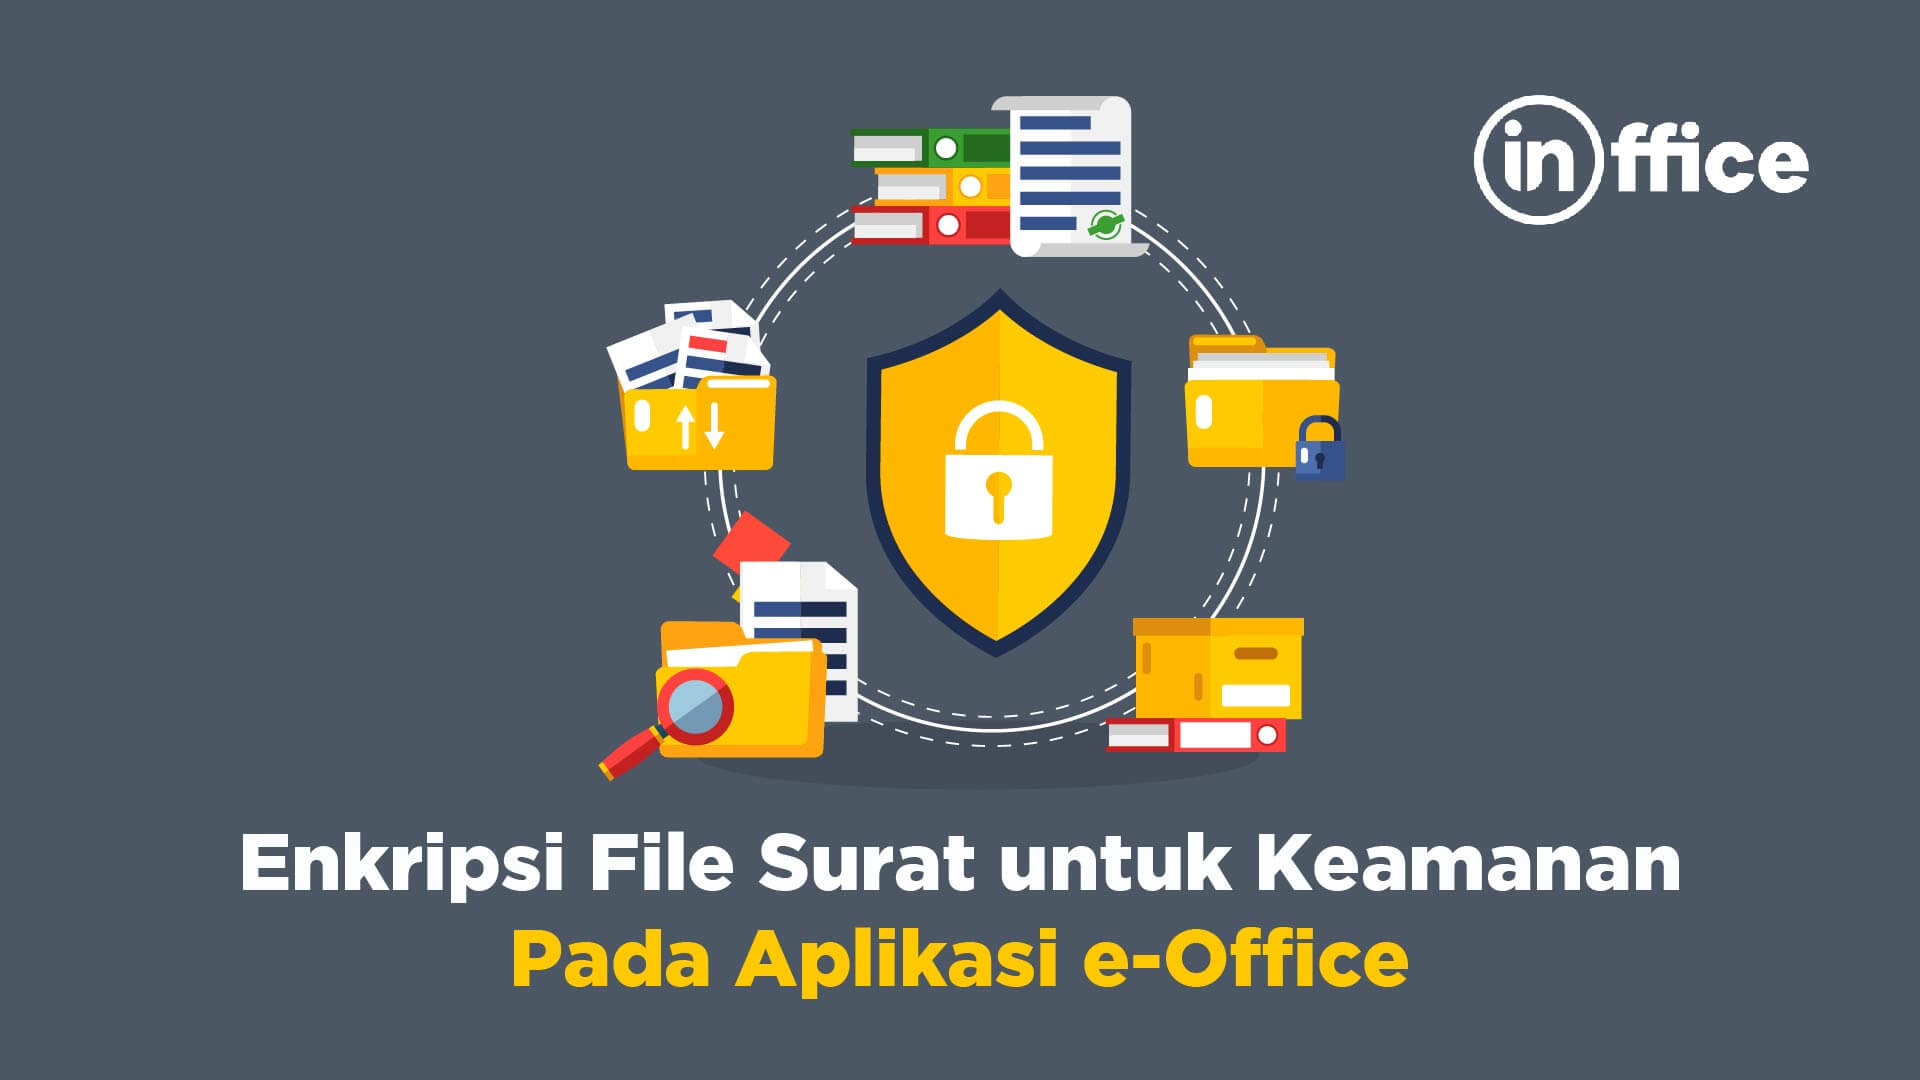 Enkripsi File Surat untuk Keamanan pada Aplikasi E-Office